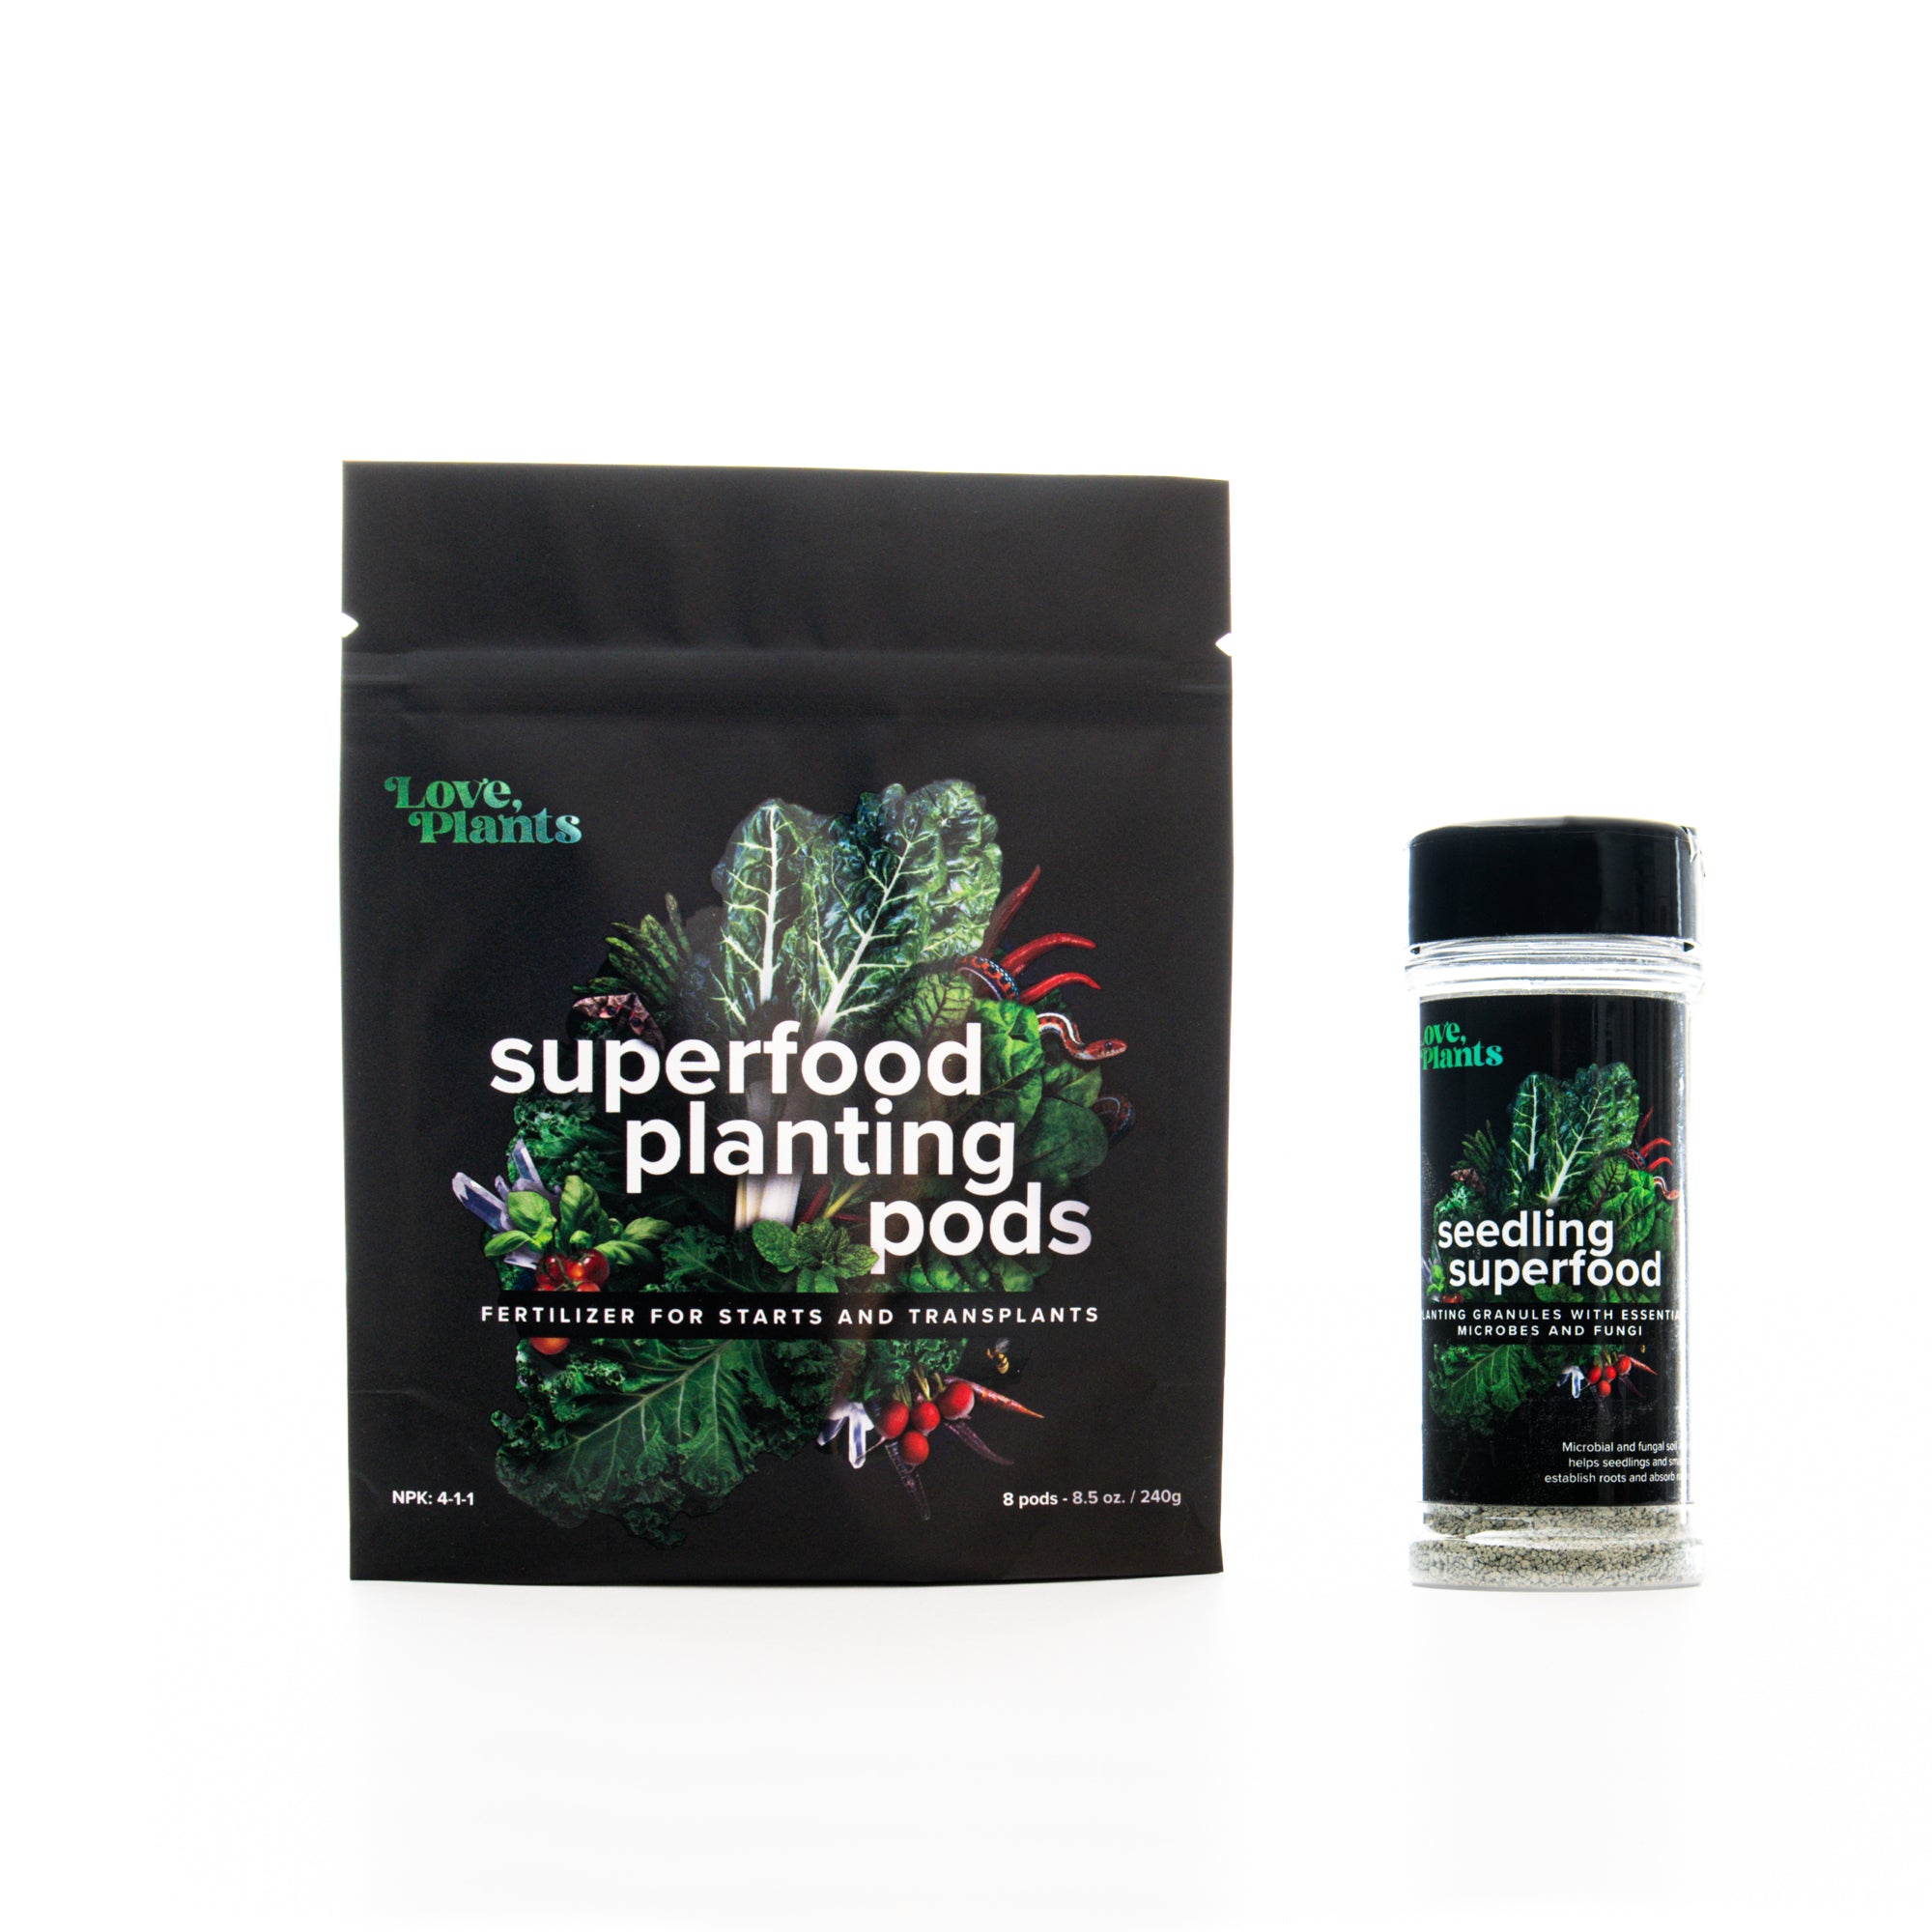 Image of Superfood Veggie Planting Pods front of bag and Seedling Superfood shaker bottle